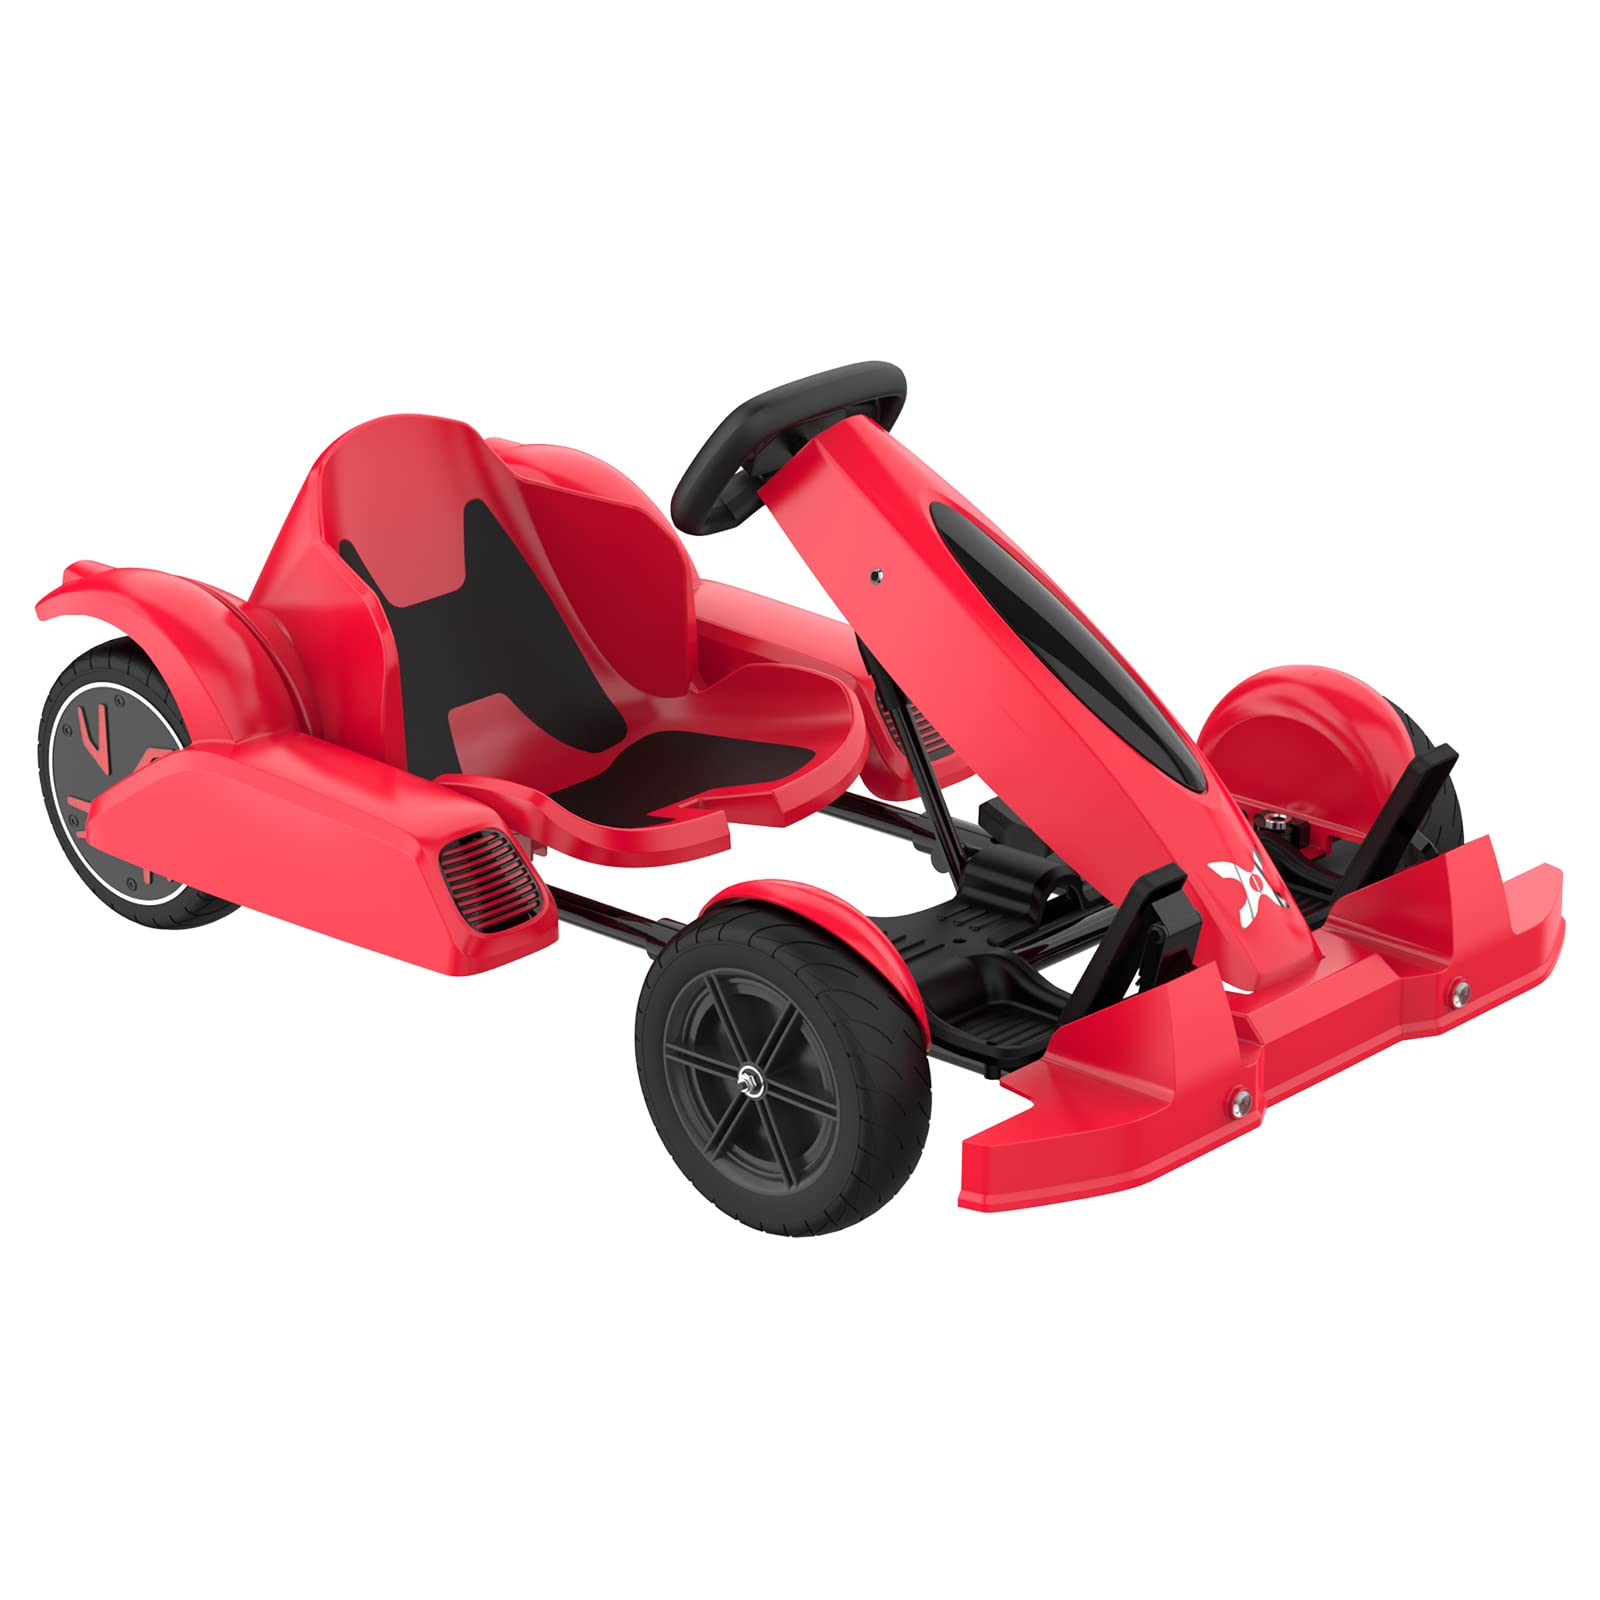 Hover-1 Formula Go-Kart w/ 700W Brushless Motor, LED Display & 10" Pneumatic Tires $700 + Free Shipping